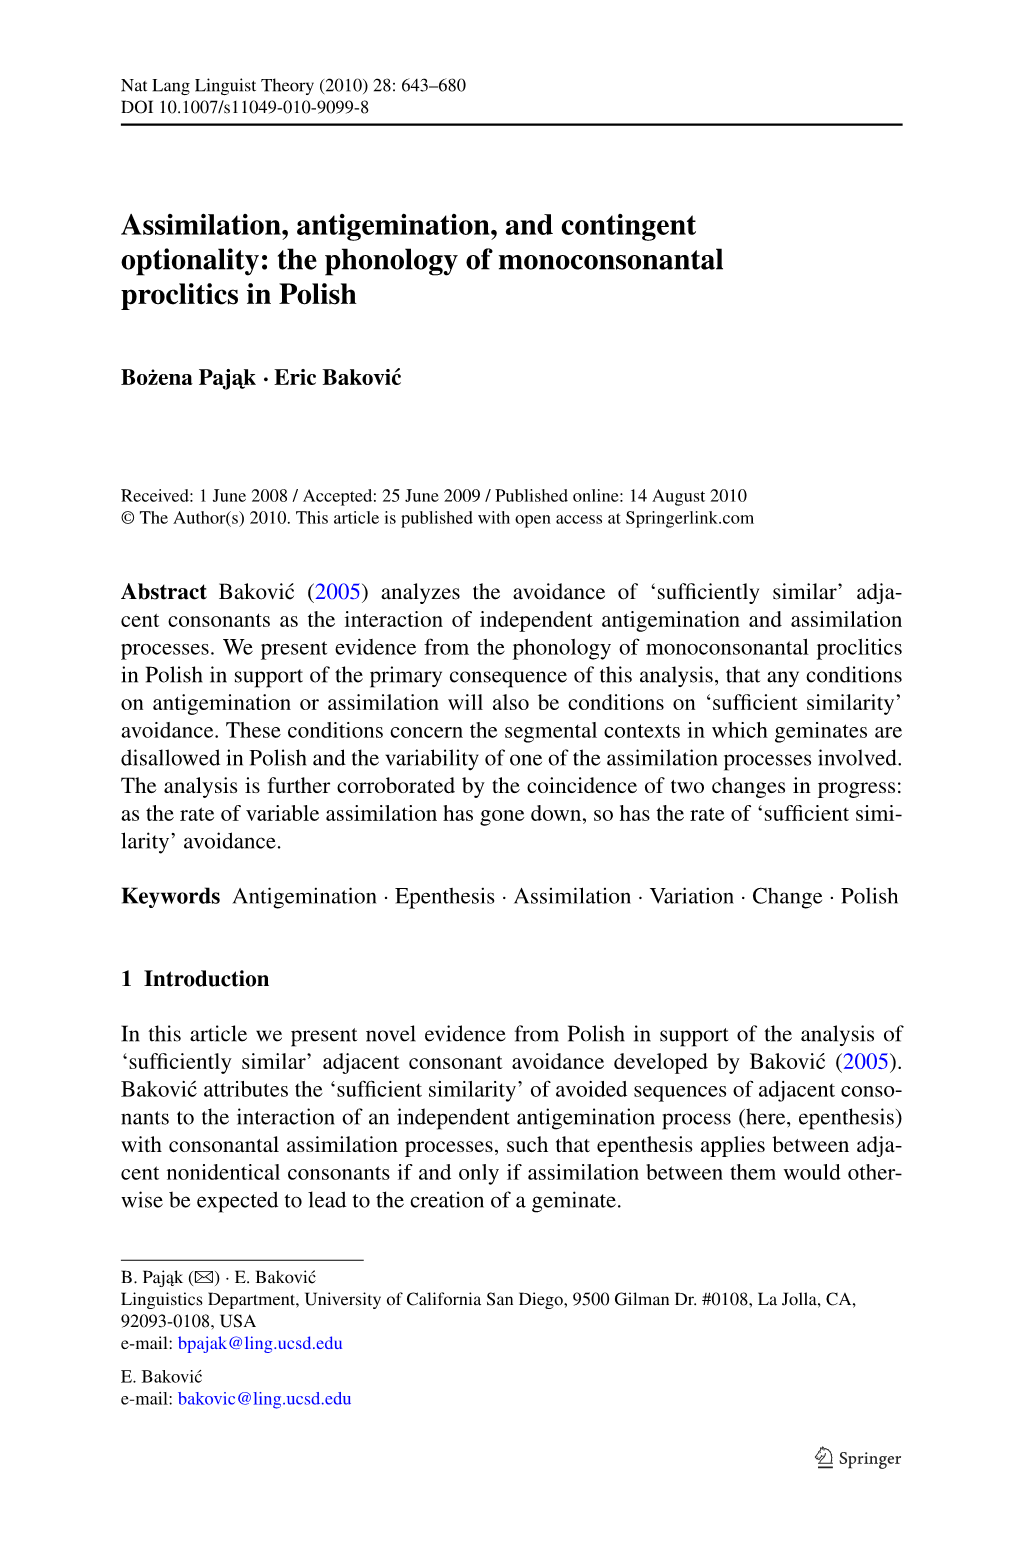 Assimilation, Antigemination, and Contingent Optionality: the Phonology of Monoconsonantal Proclitics in Polish